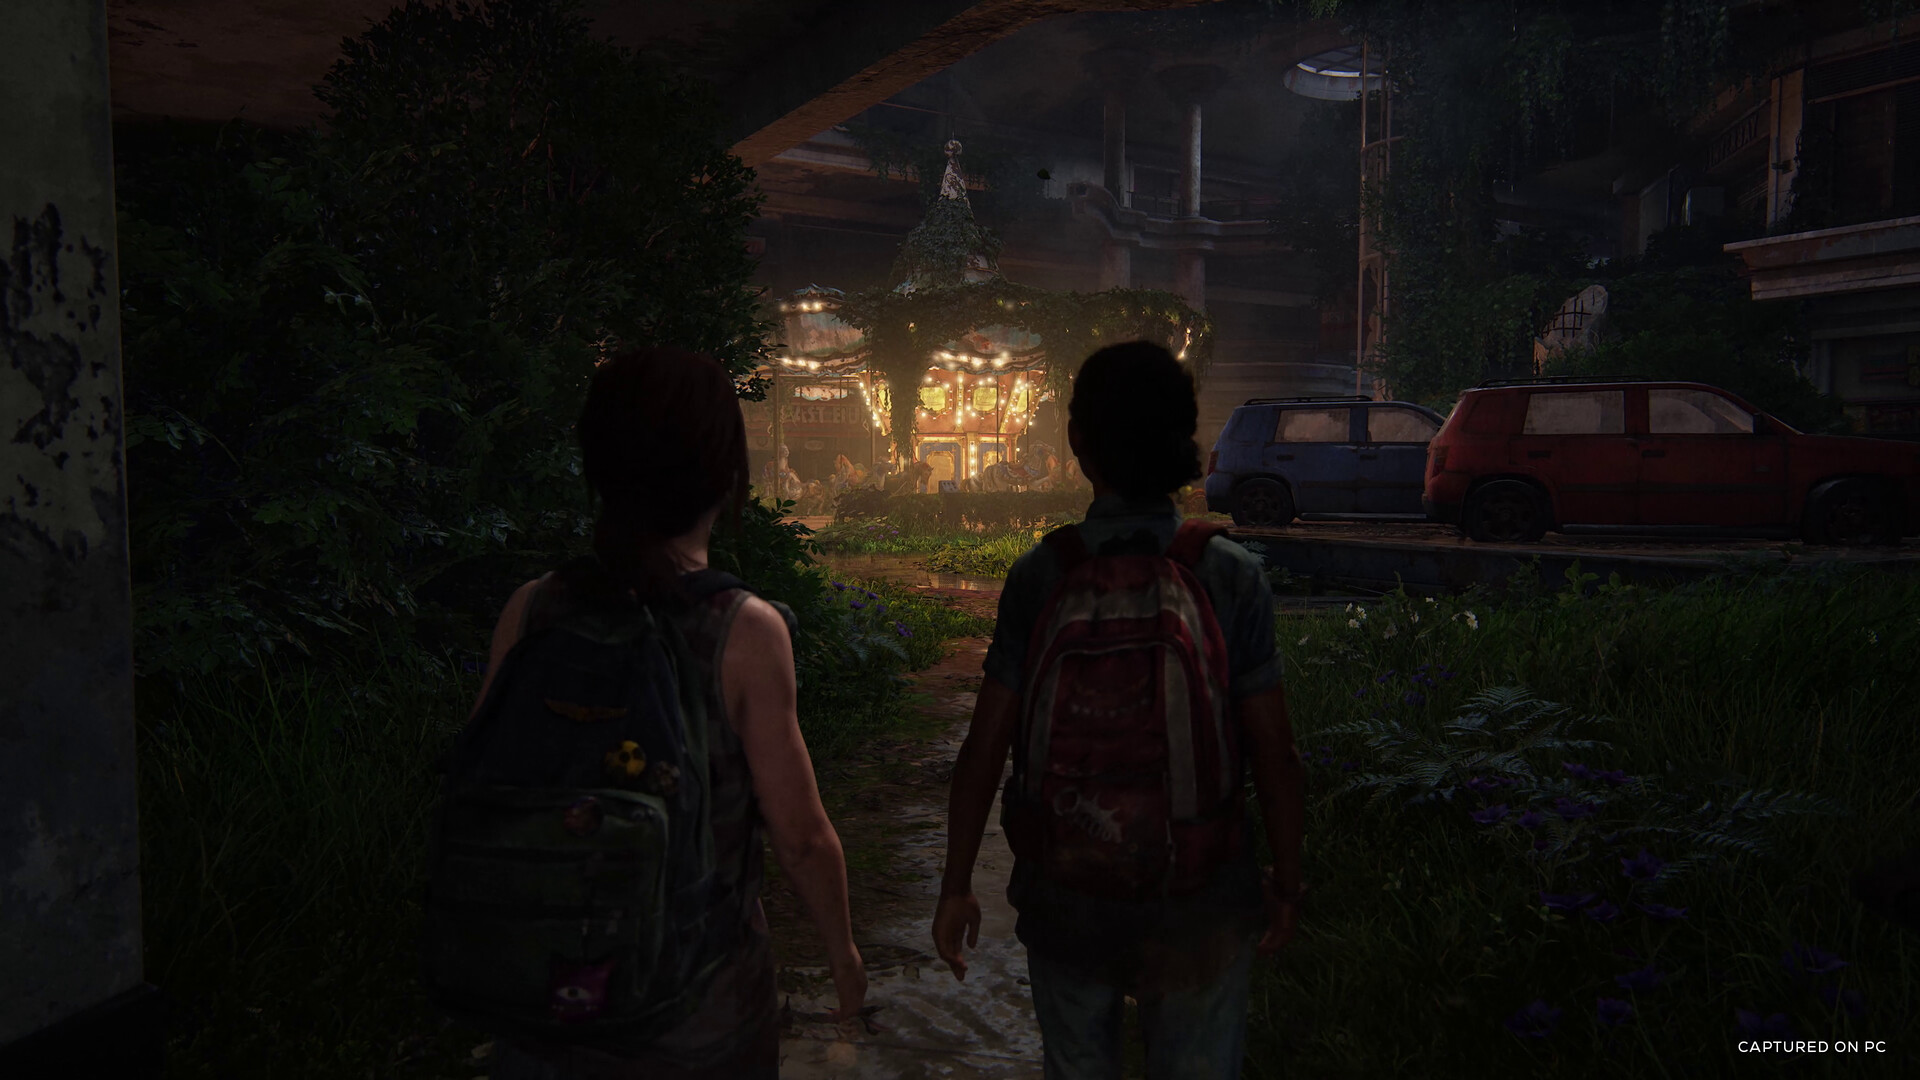 最后生还者-美末1/The Last of Us™ Part I（v1.1.2.0+预购奖励+前传-全DLC）-彩豆博客